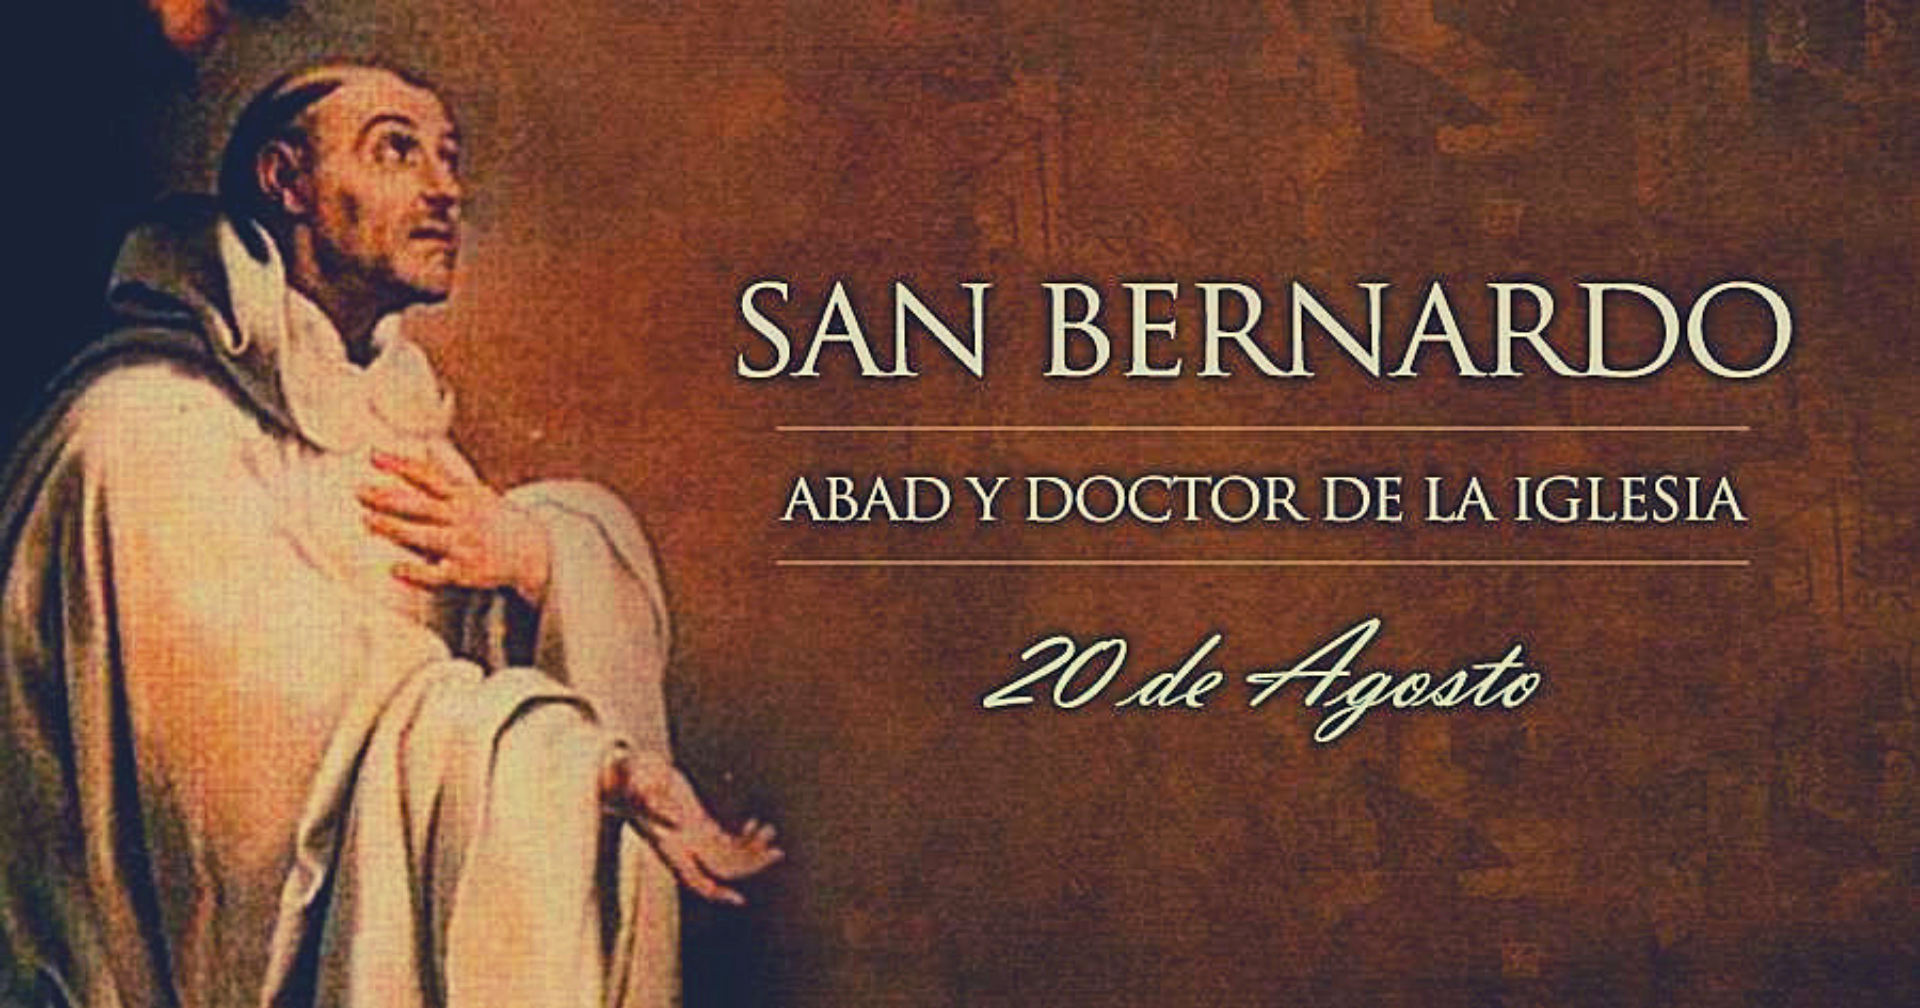 San Bernardo Abad